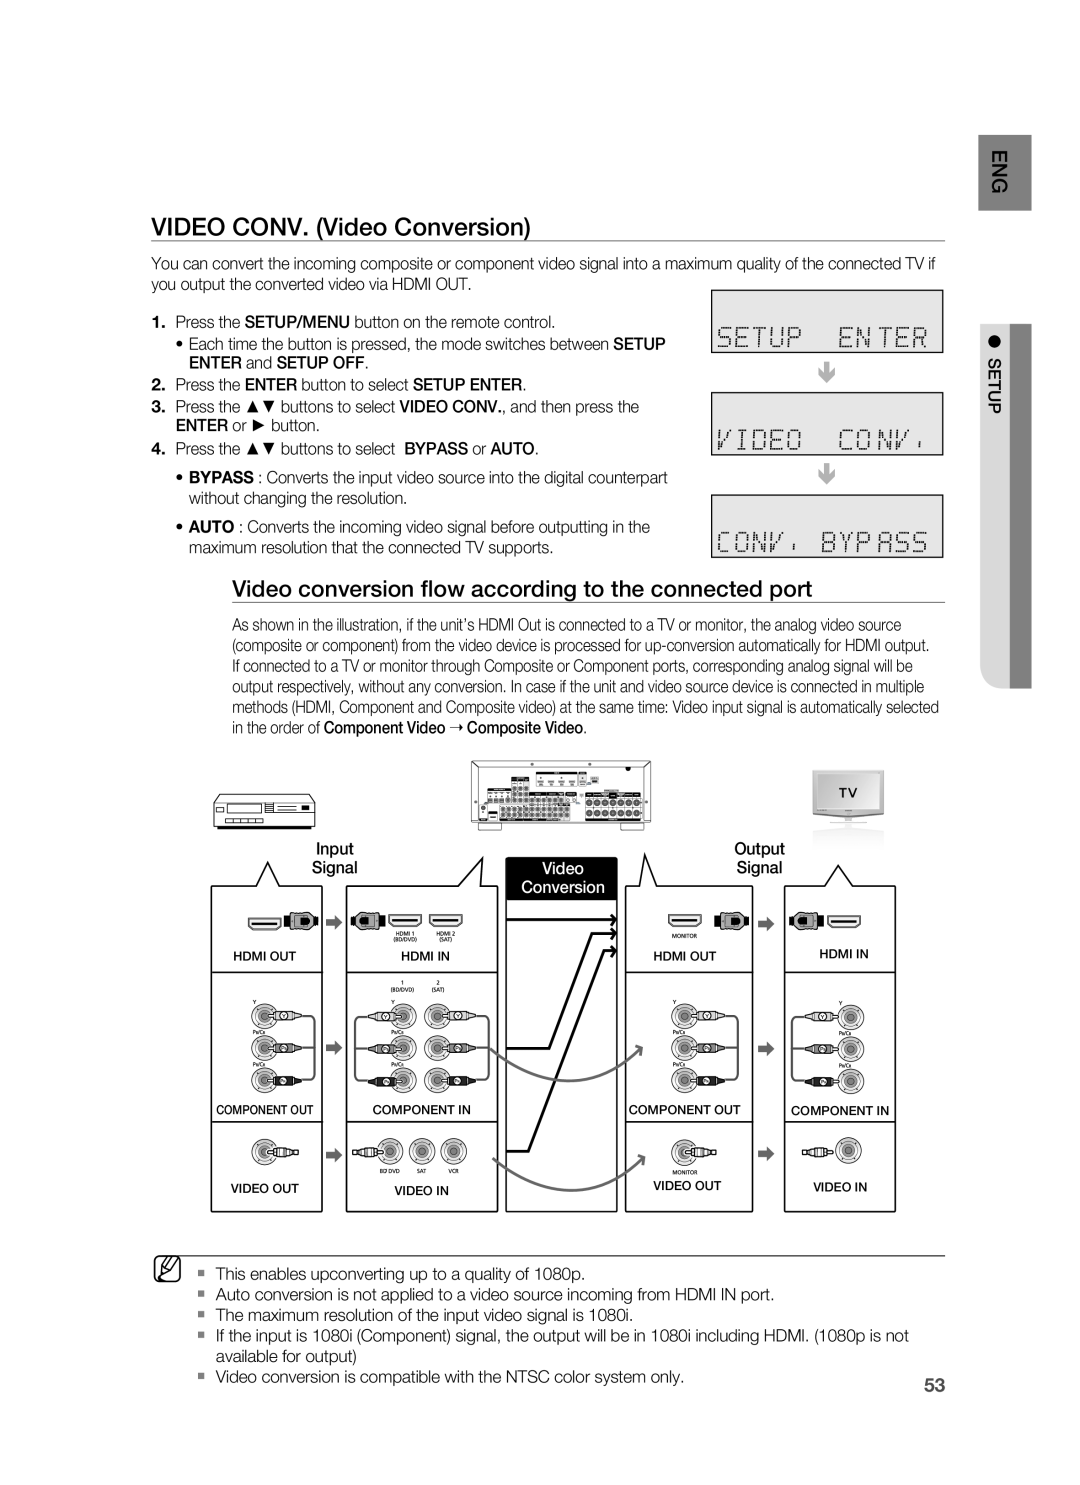 Samsung HW-C900-XAA user manual VIDEO CONV. Video Conversion 